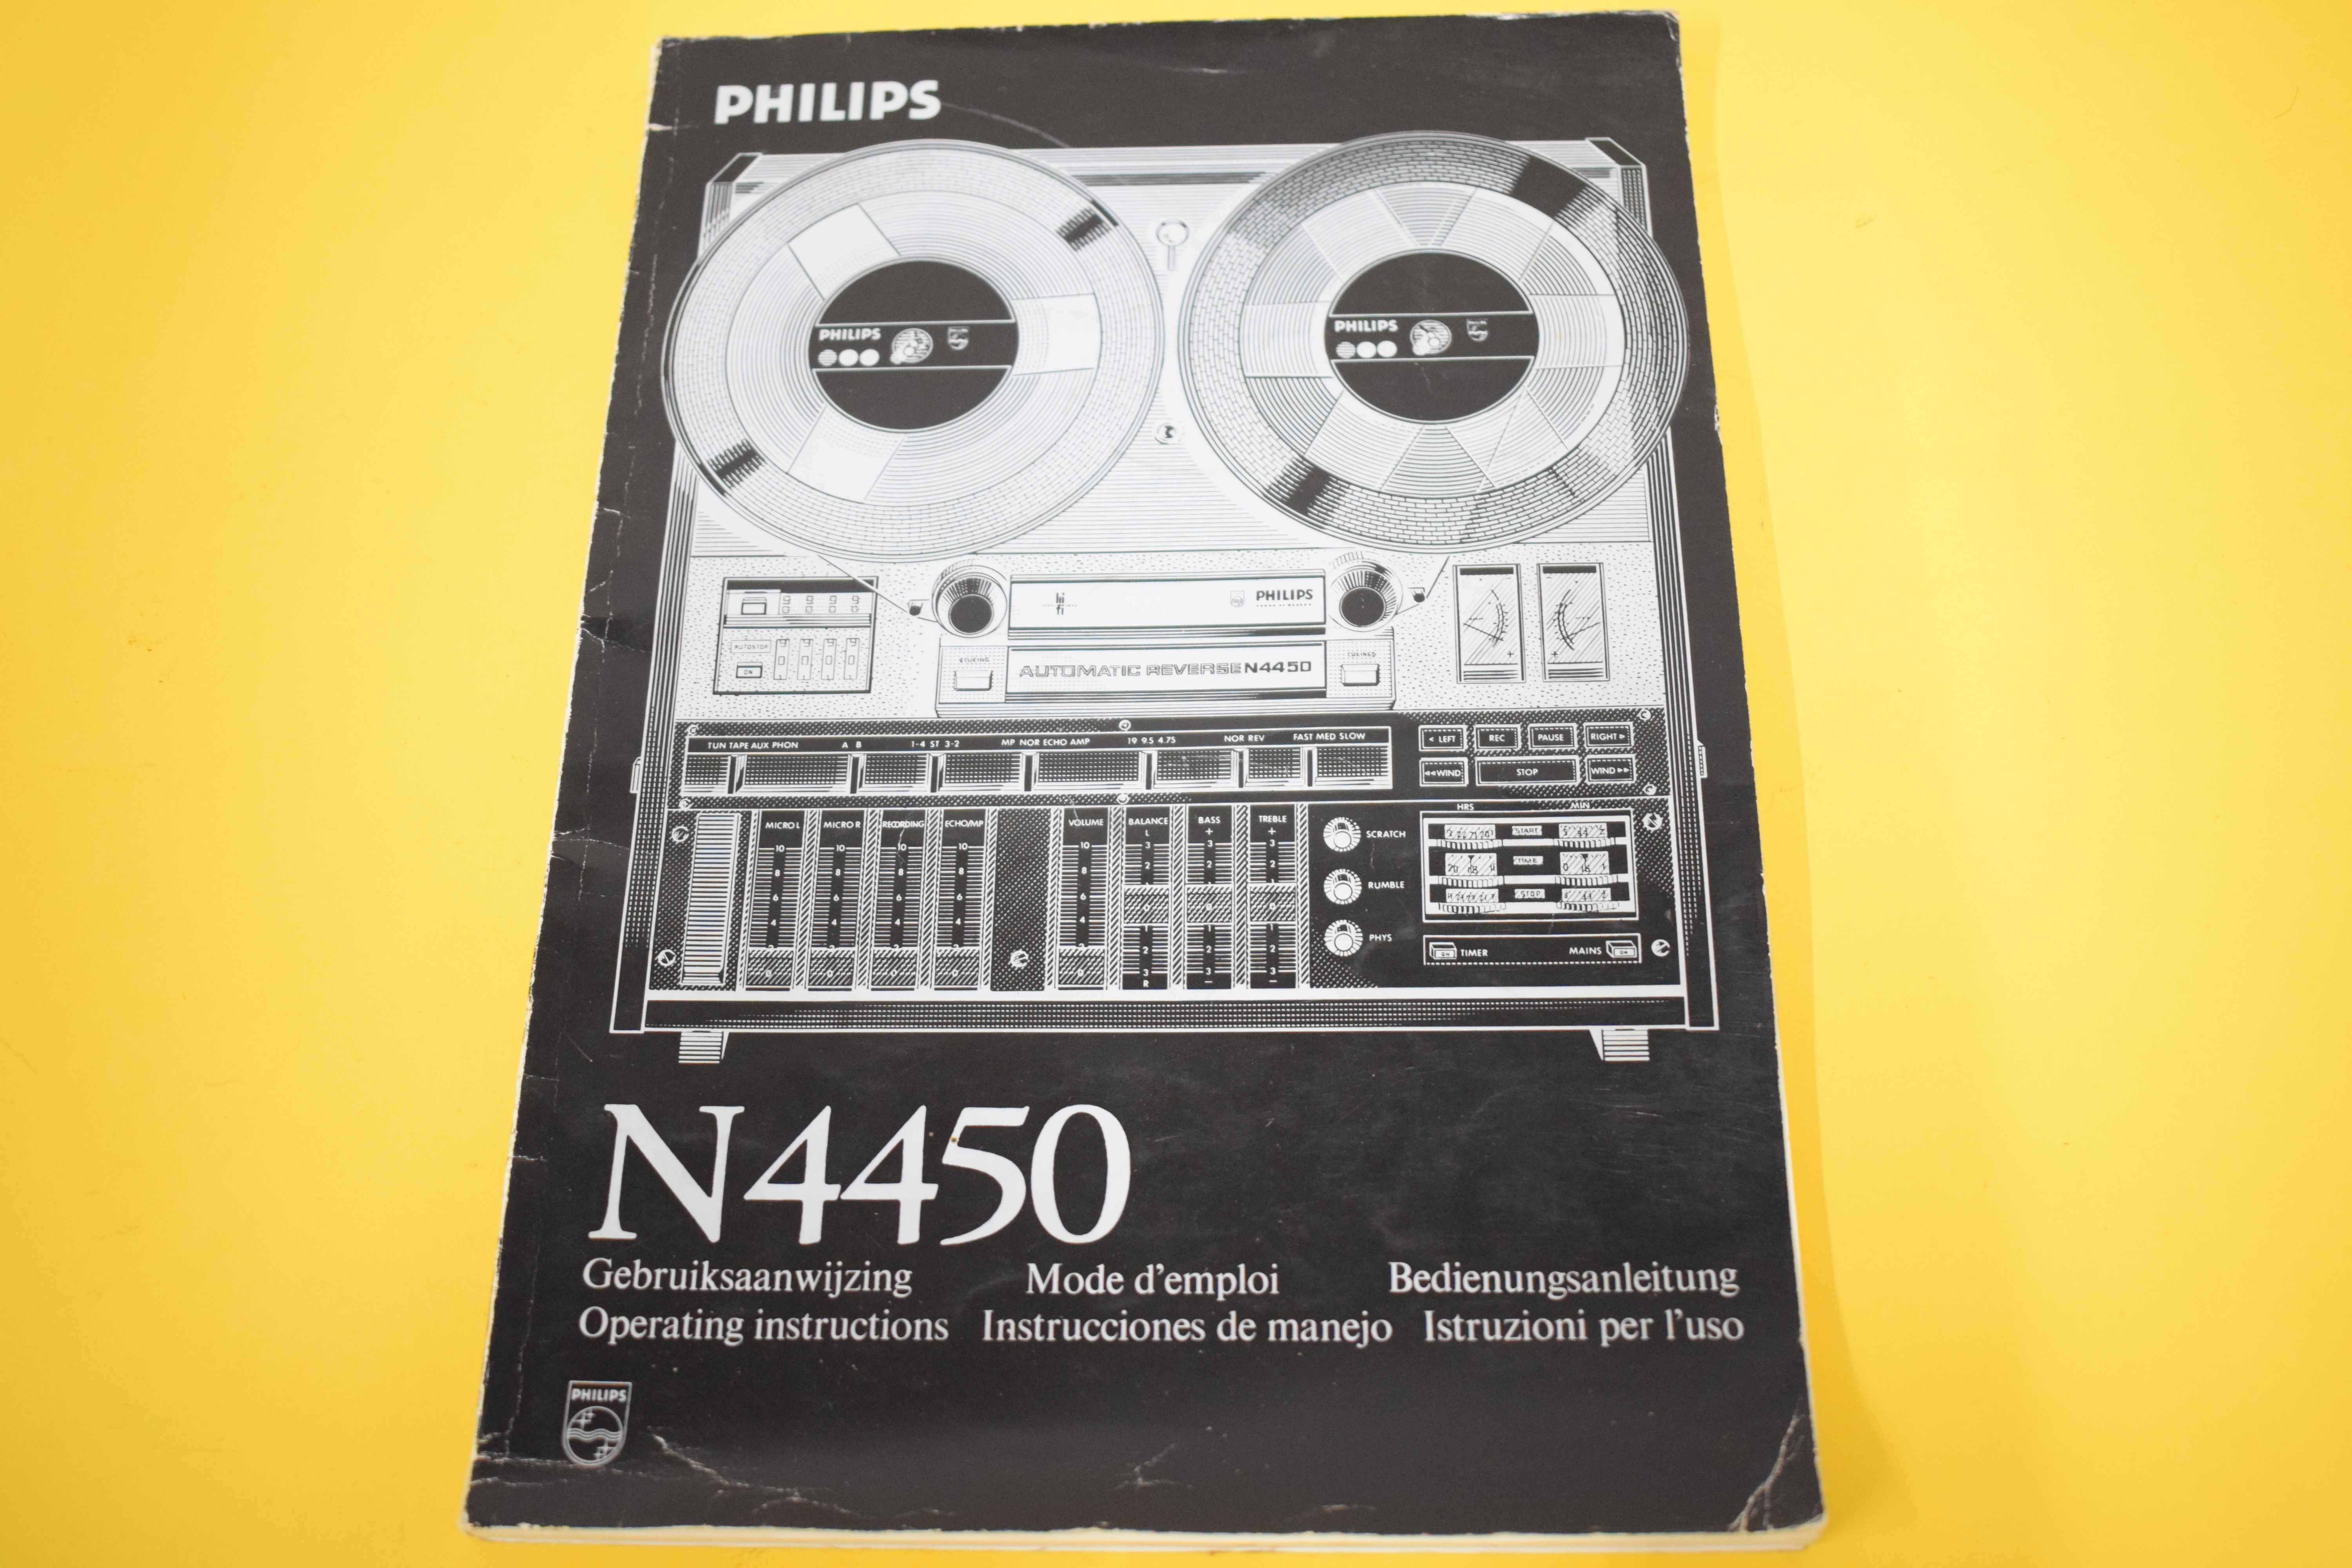 Philips N4450 Tape Recorder User Manual